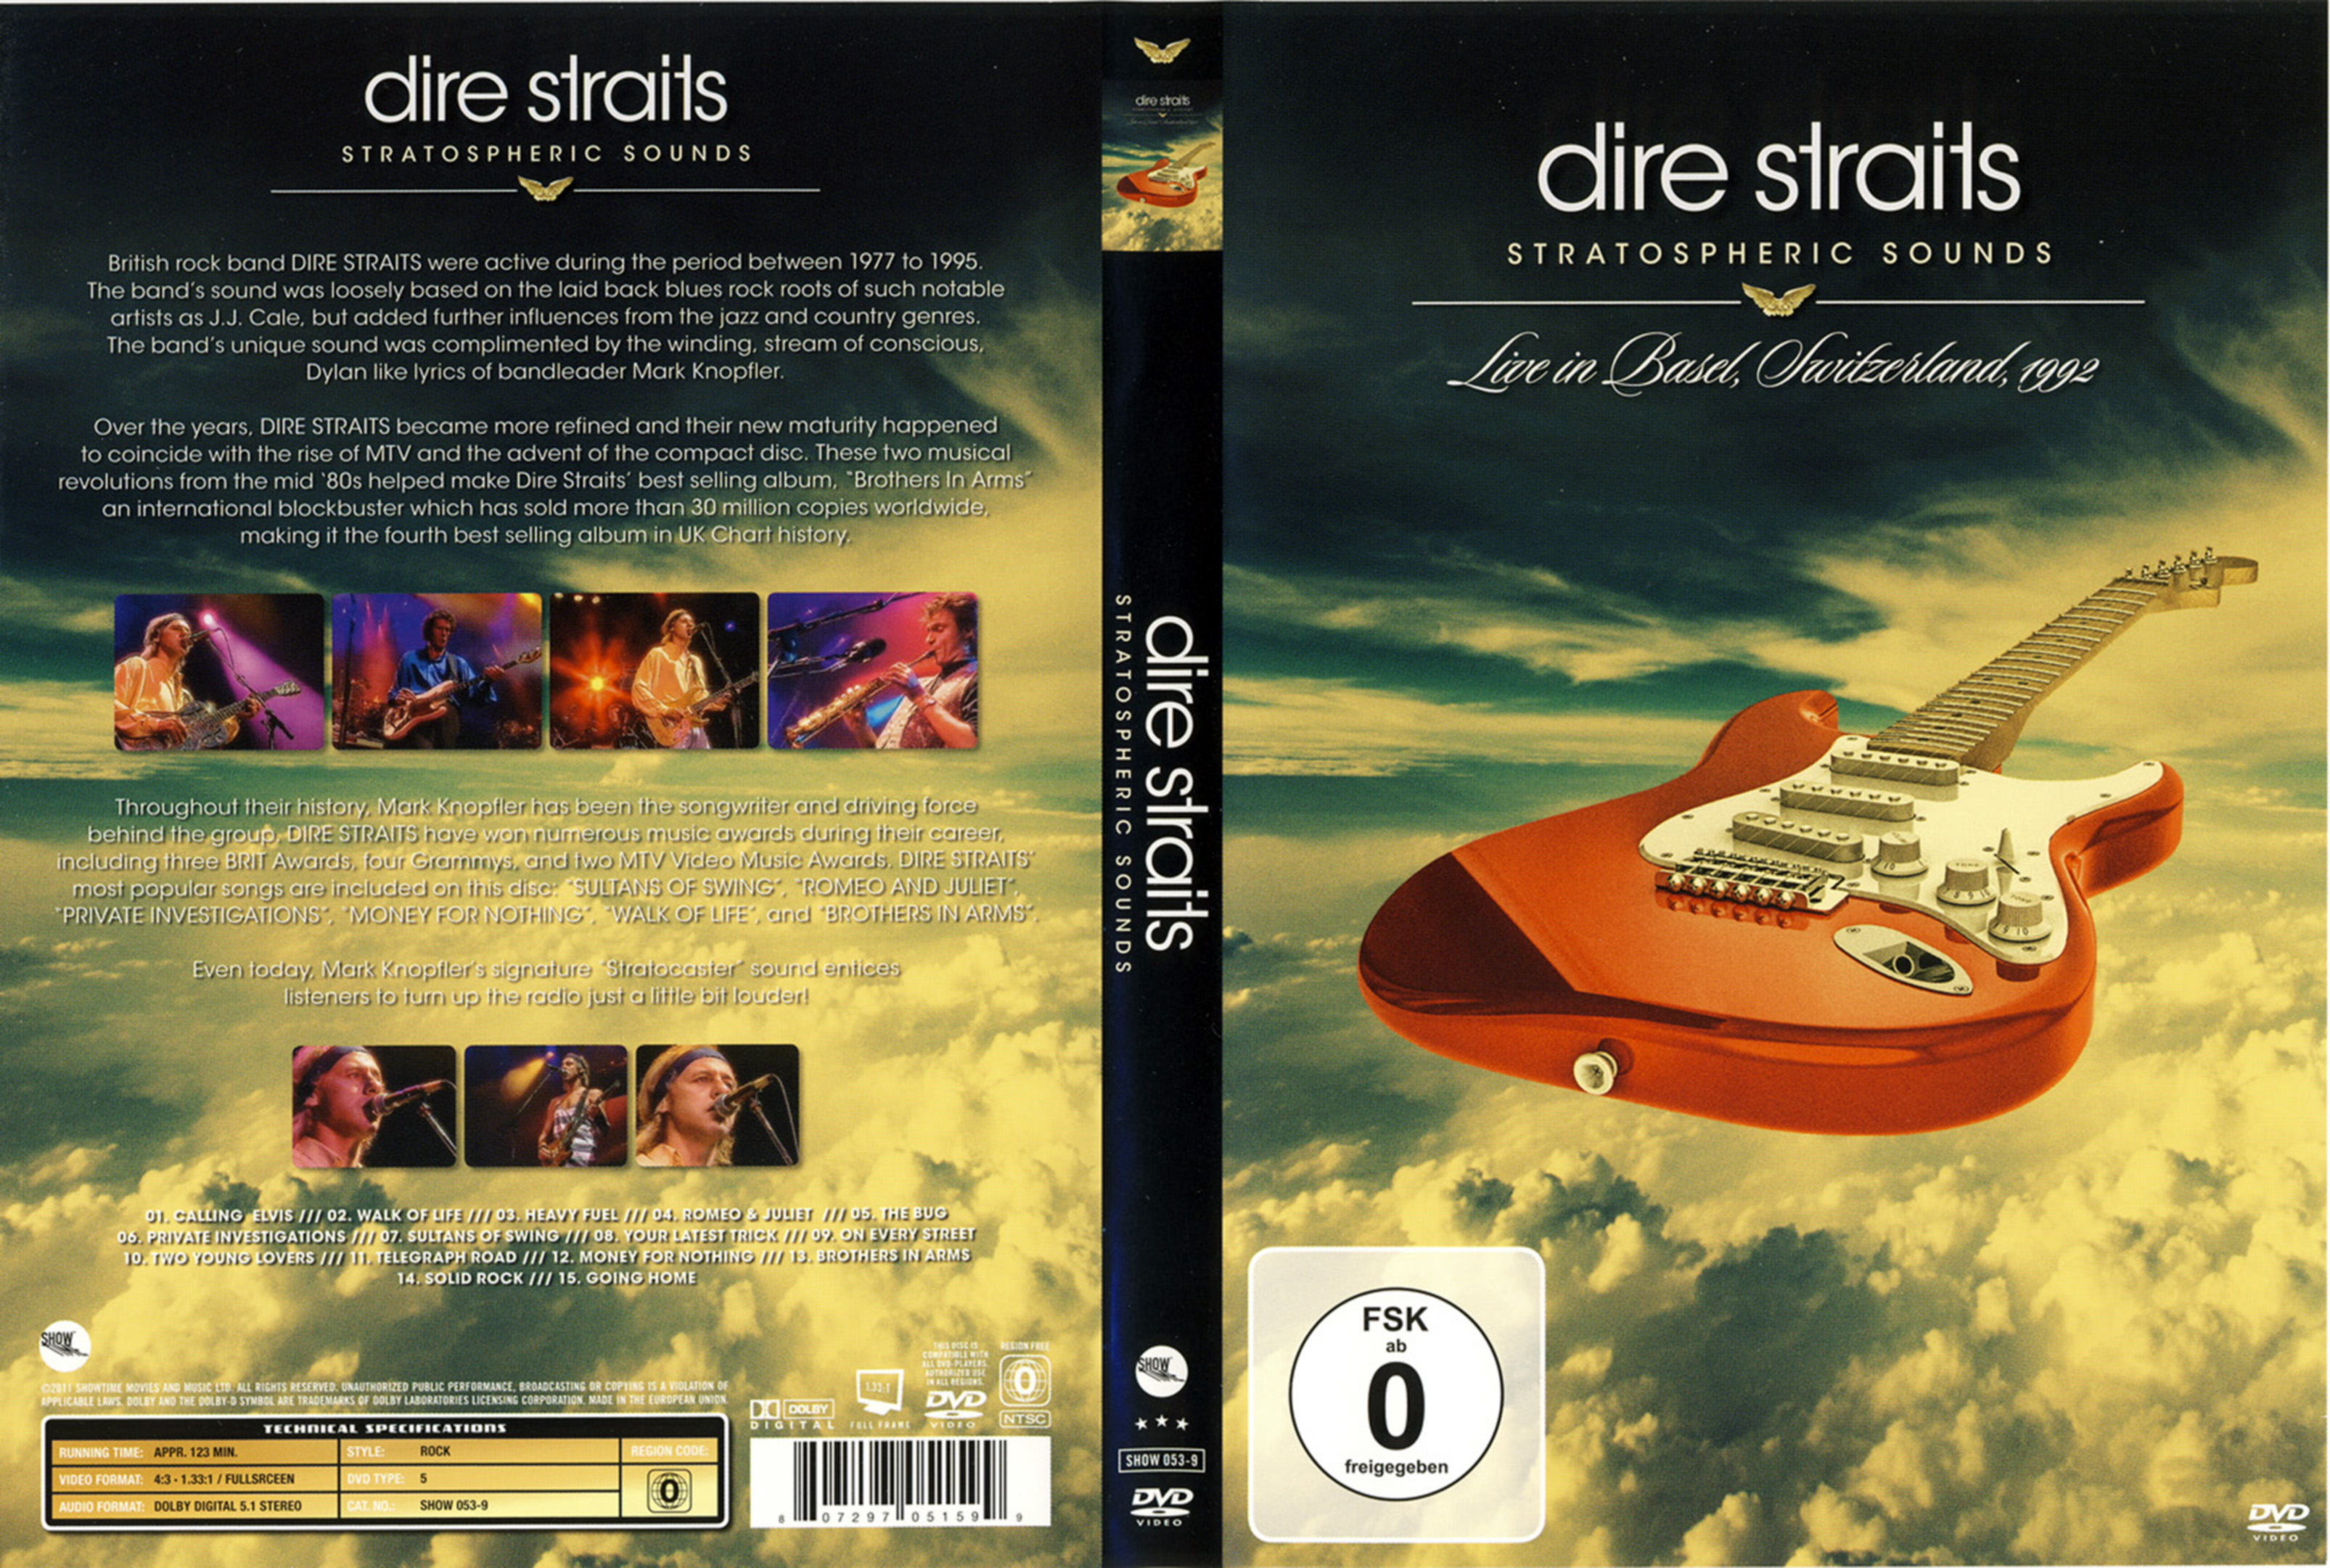 Jaquette DVD Dire Straits - Stratospheric sounds